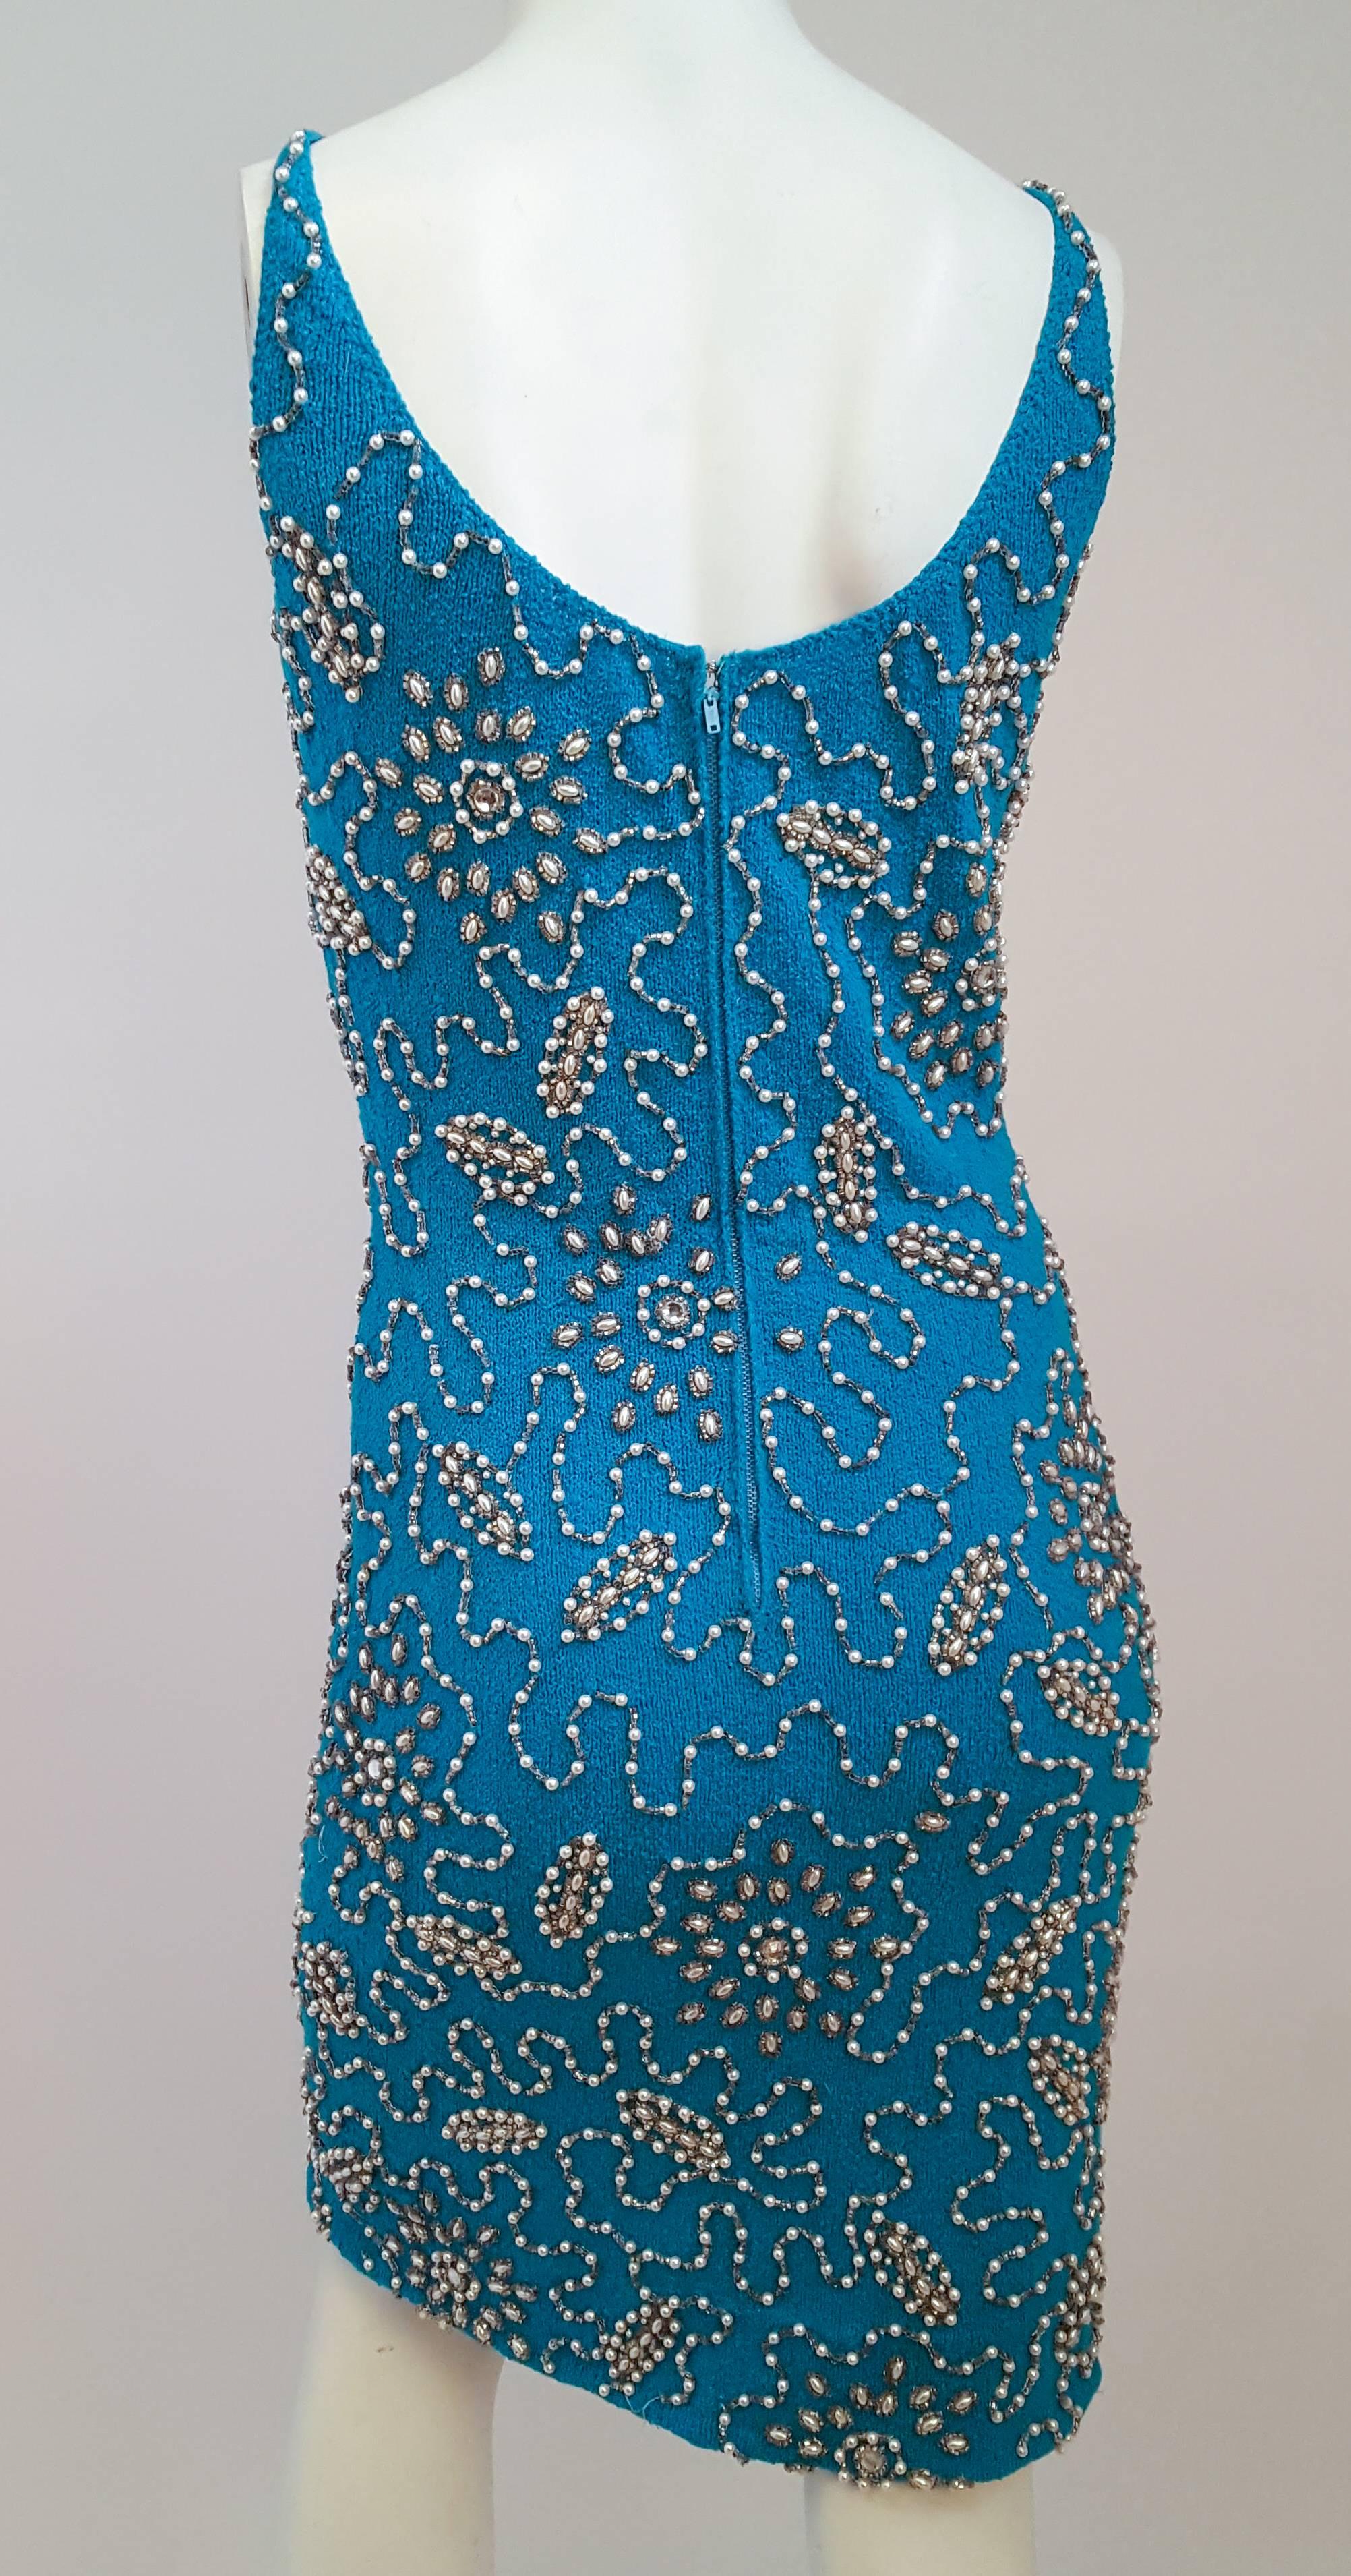 1960s Aqua Knit Beaded Mini Dress. Back zip closure. 